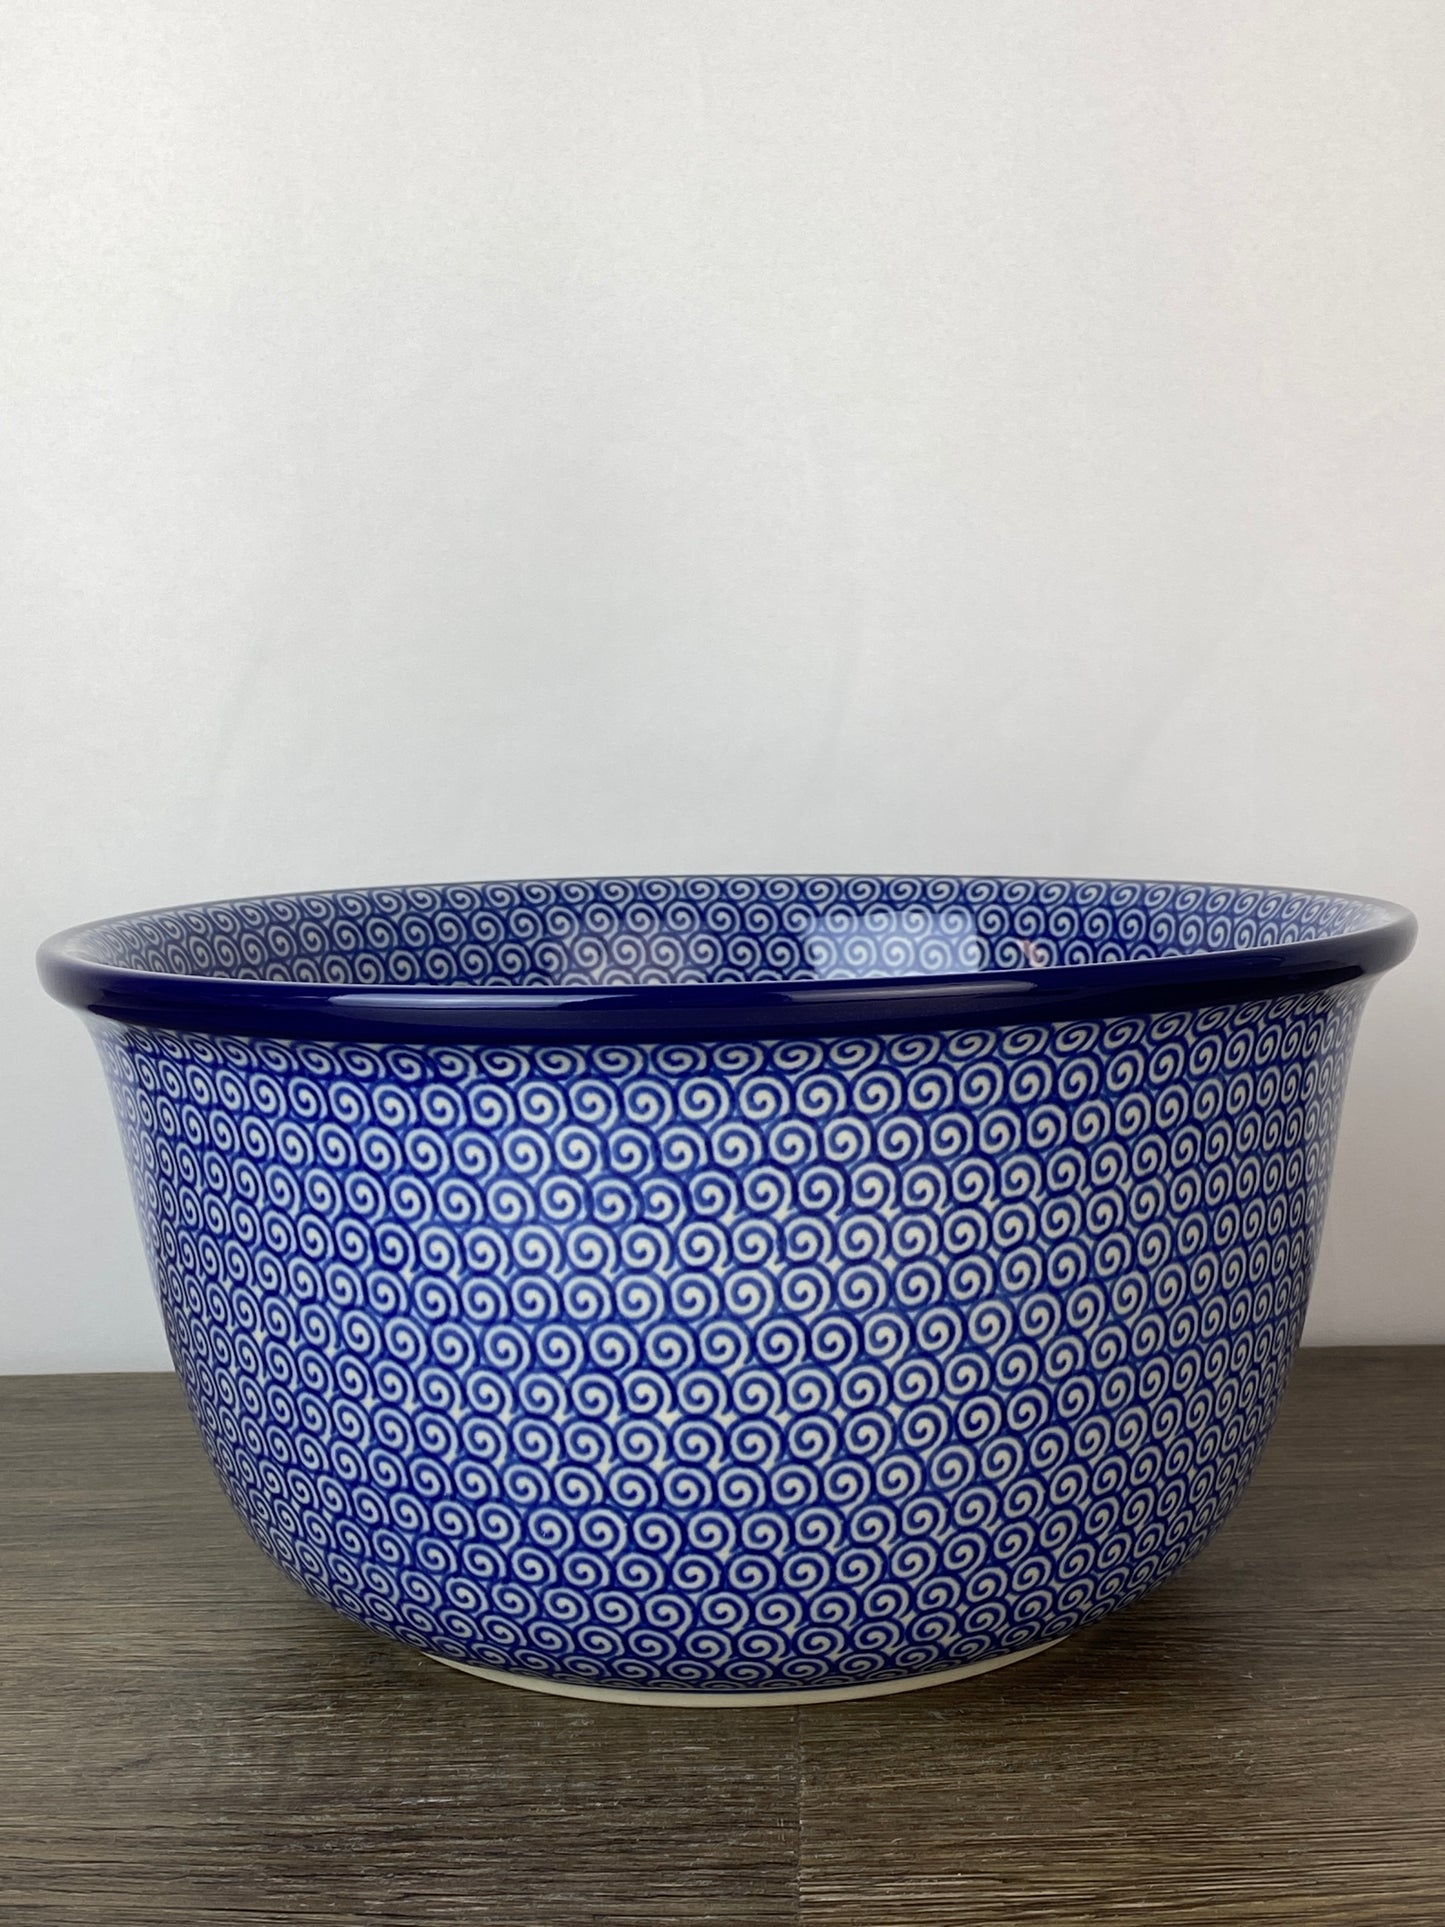 SALE Large Mixing Bowl - Shape 113 - Pattern 26